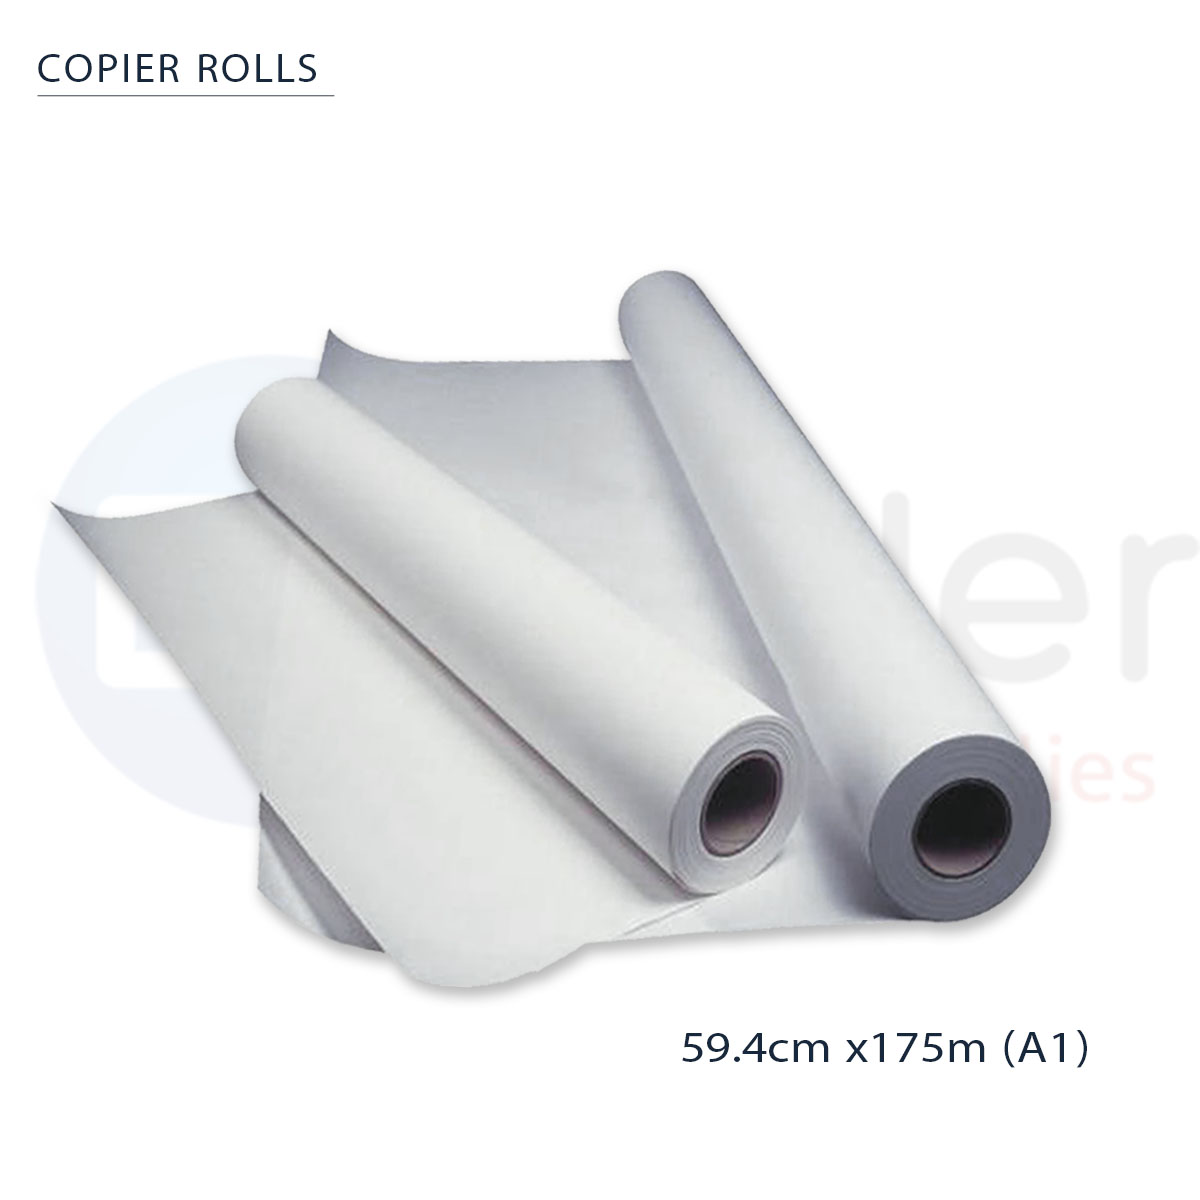 +Copier Roll A1 (59.4cmx175m) KANGAS, Core-7.5cm